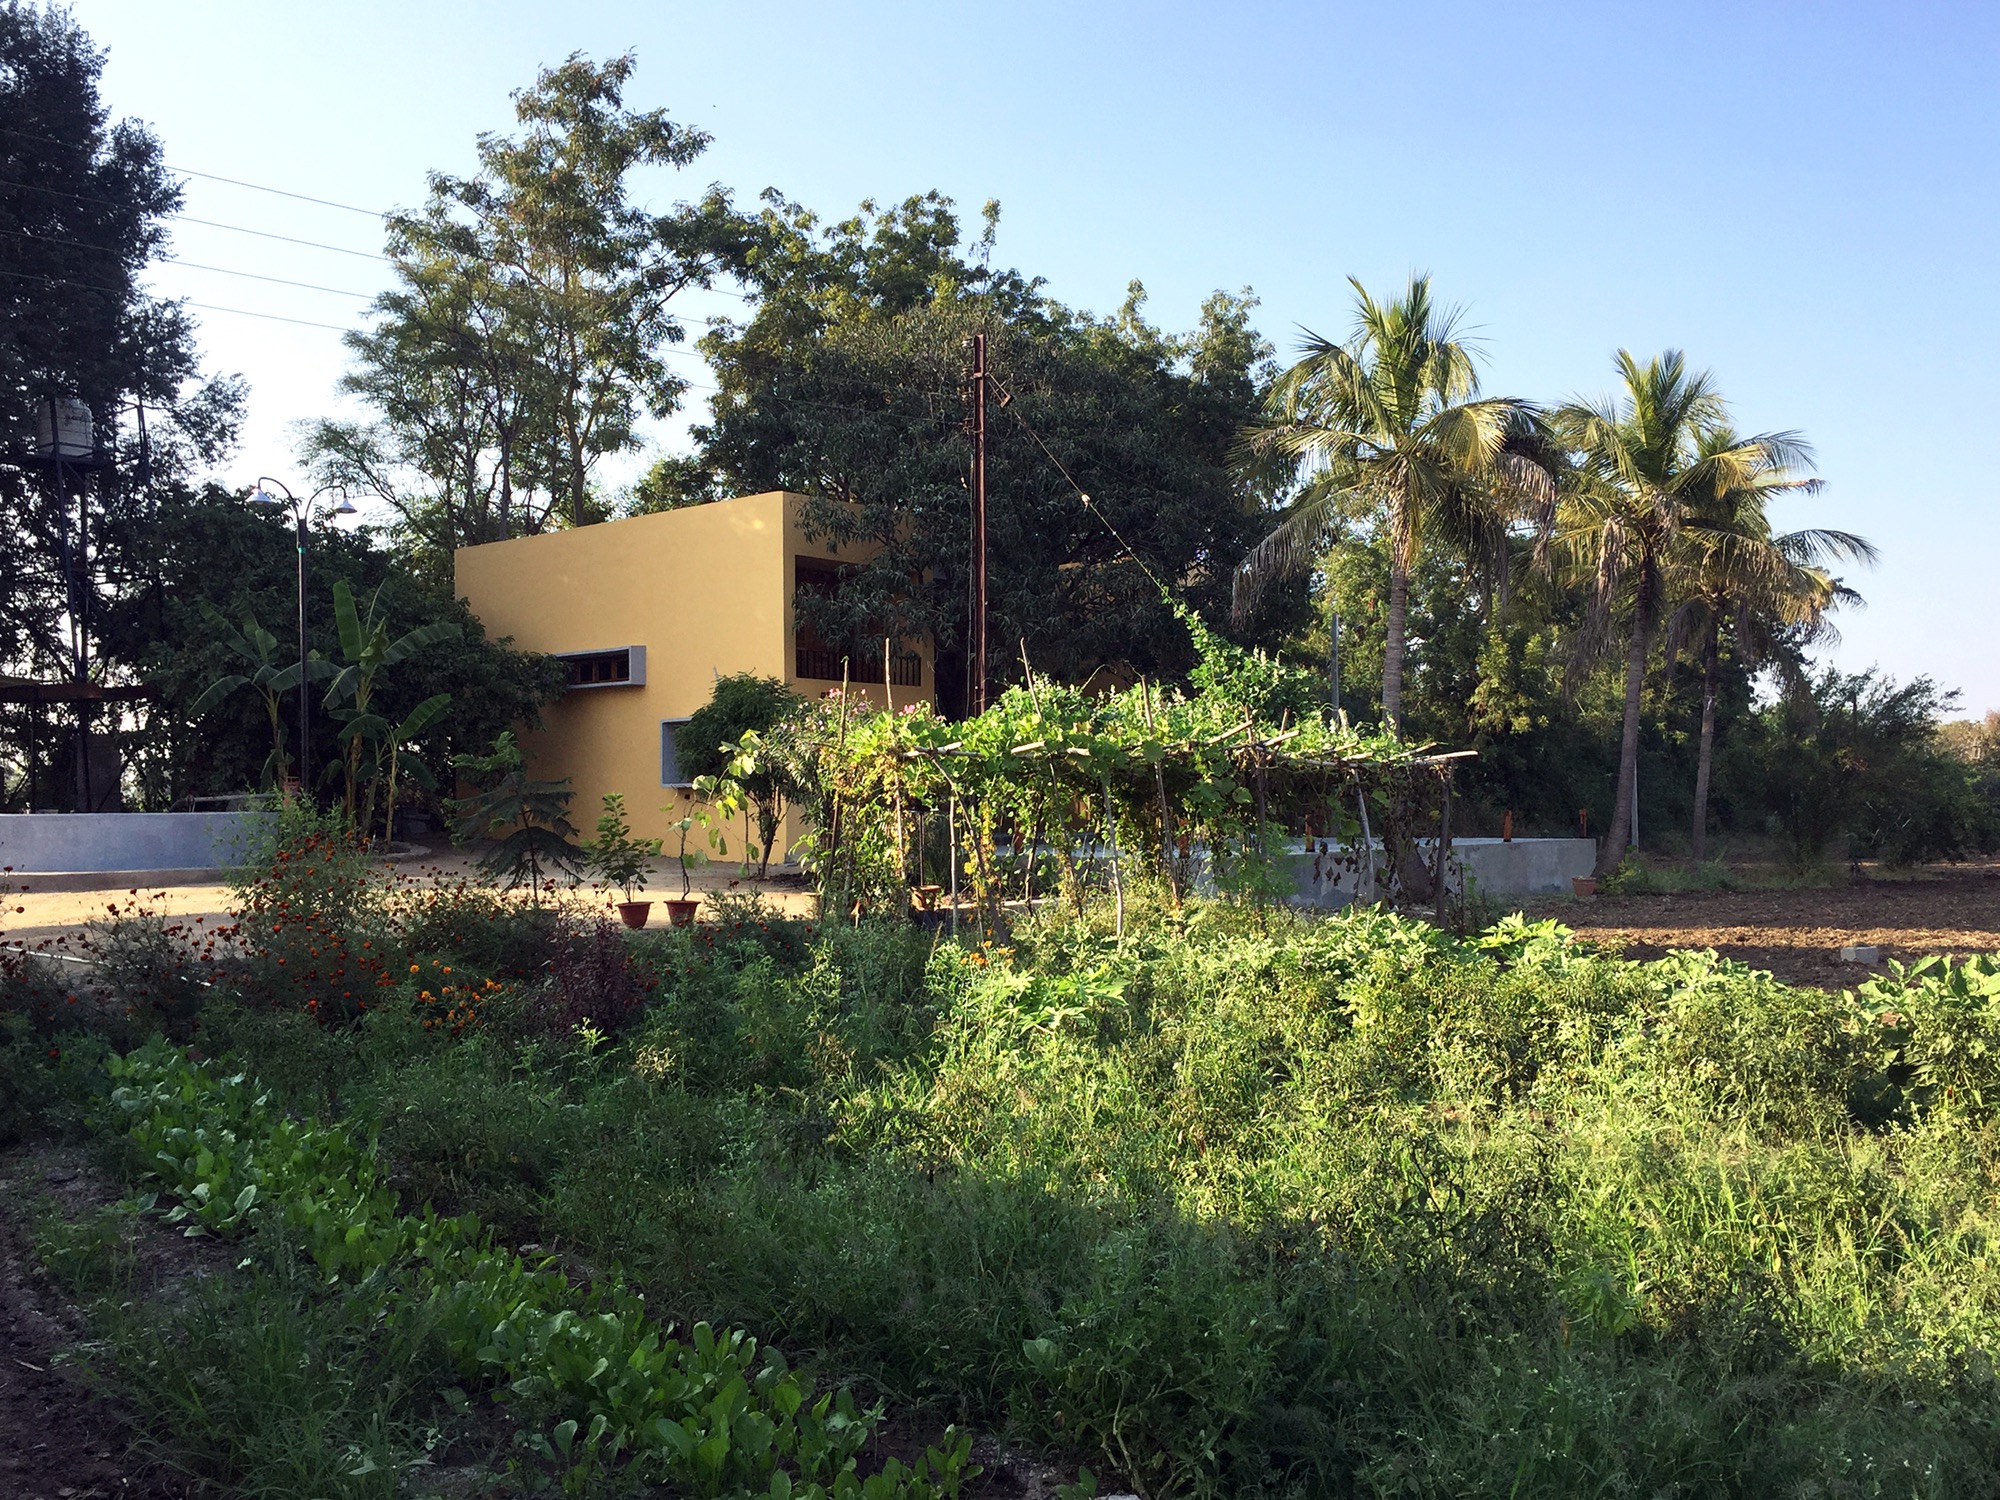 Mango Tree House at Saatnavri, Maharashtra, India by Samvad Design Studio, Bengaluru 2